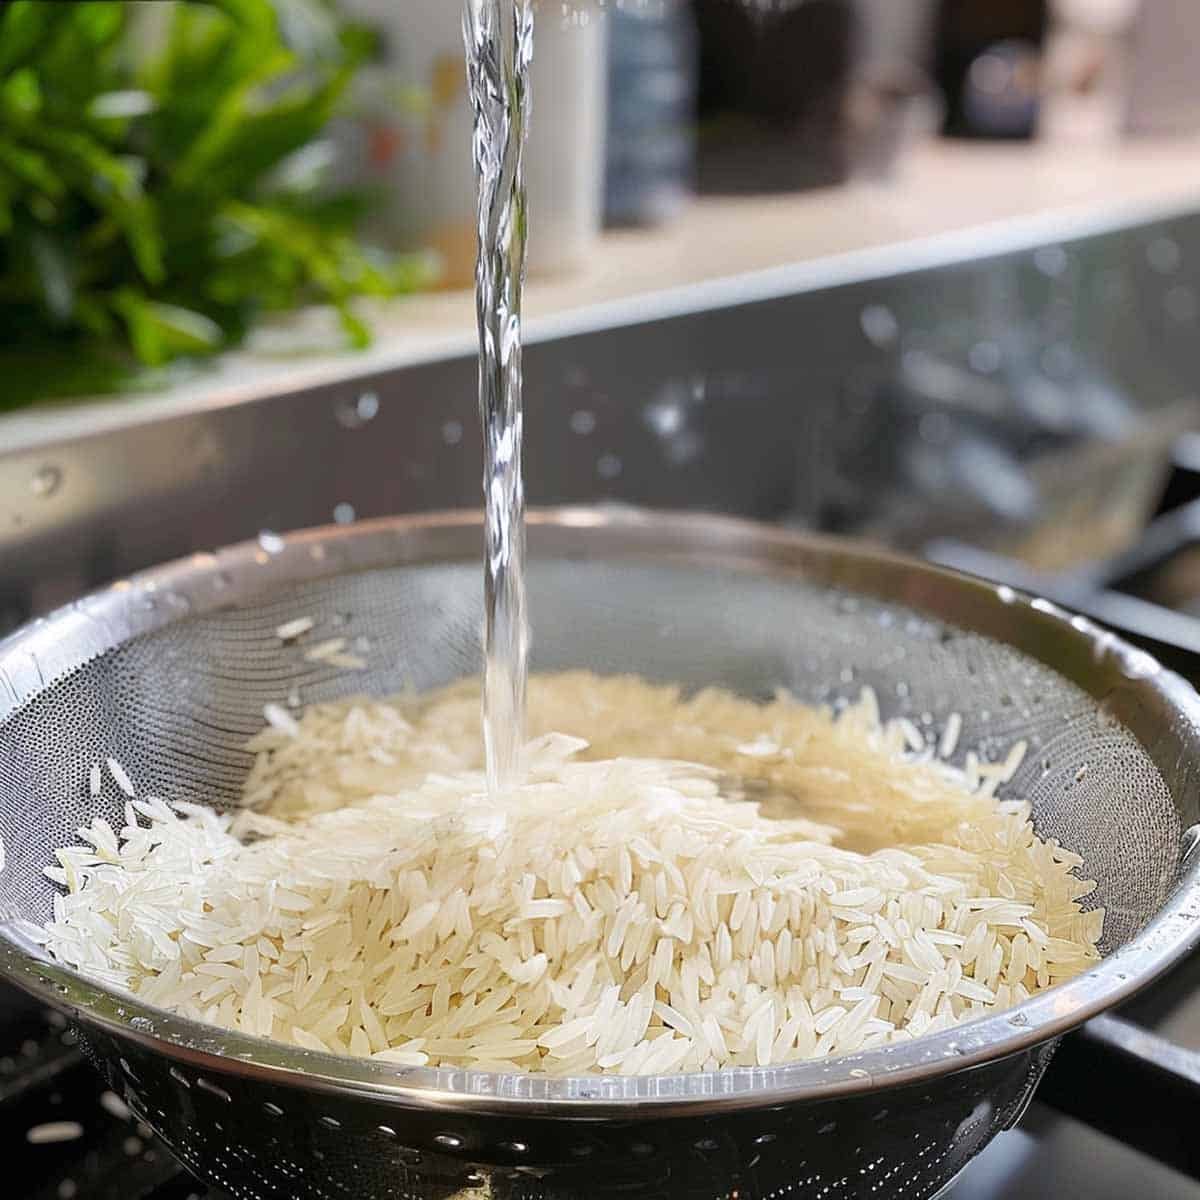 Rinsing rice under running water in a colander